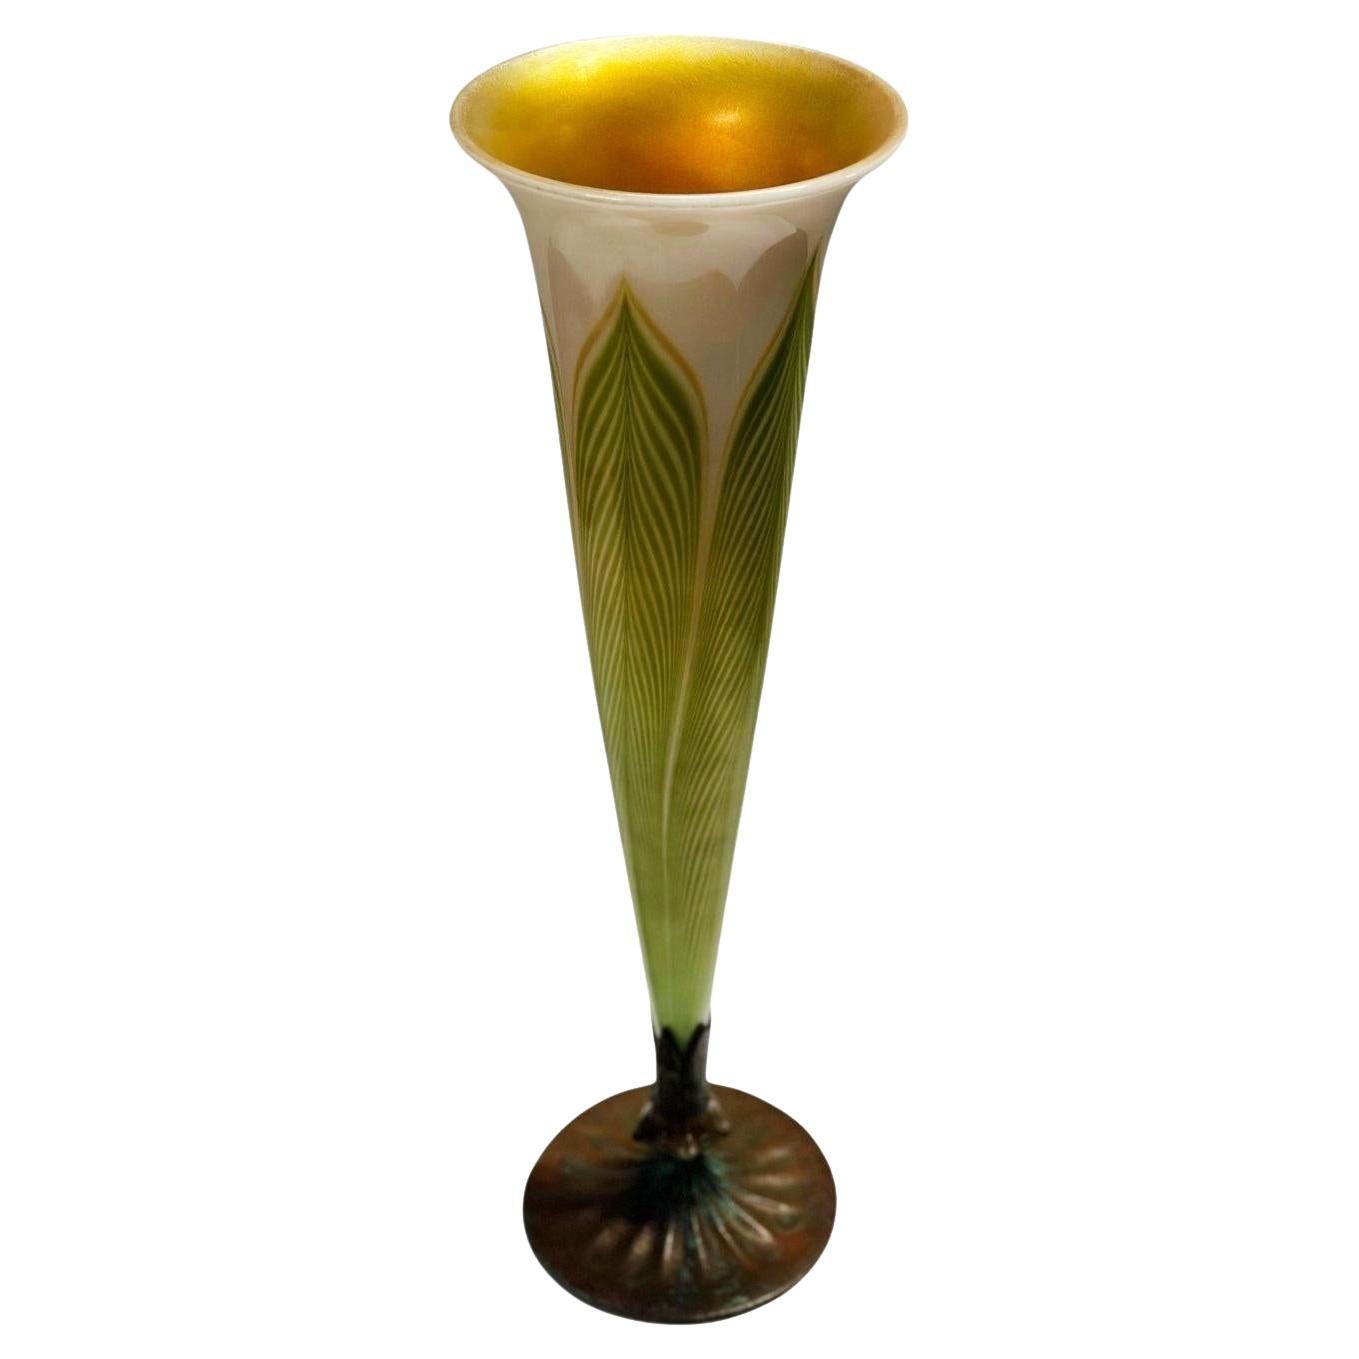 Vintage L.C. Tiffany Studios Feathered Favrile Glass Vase, c. 1980's For Sale